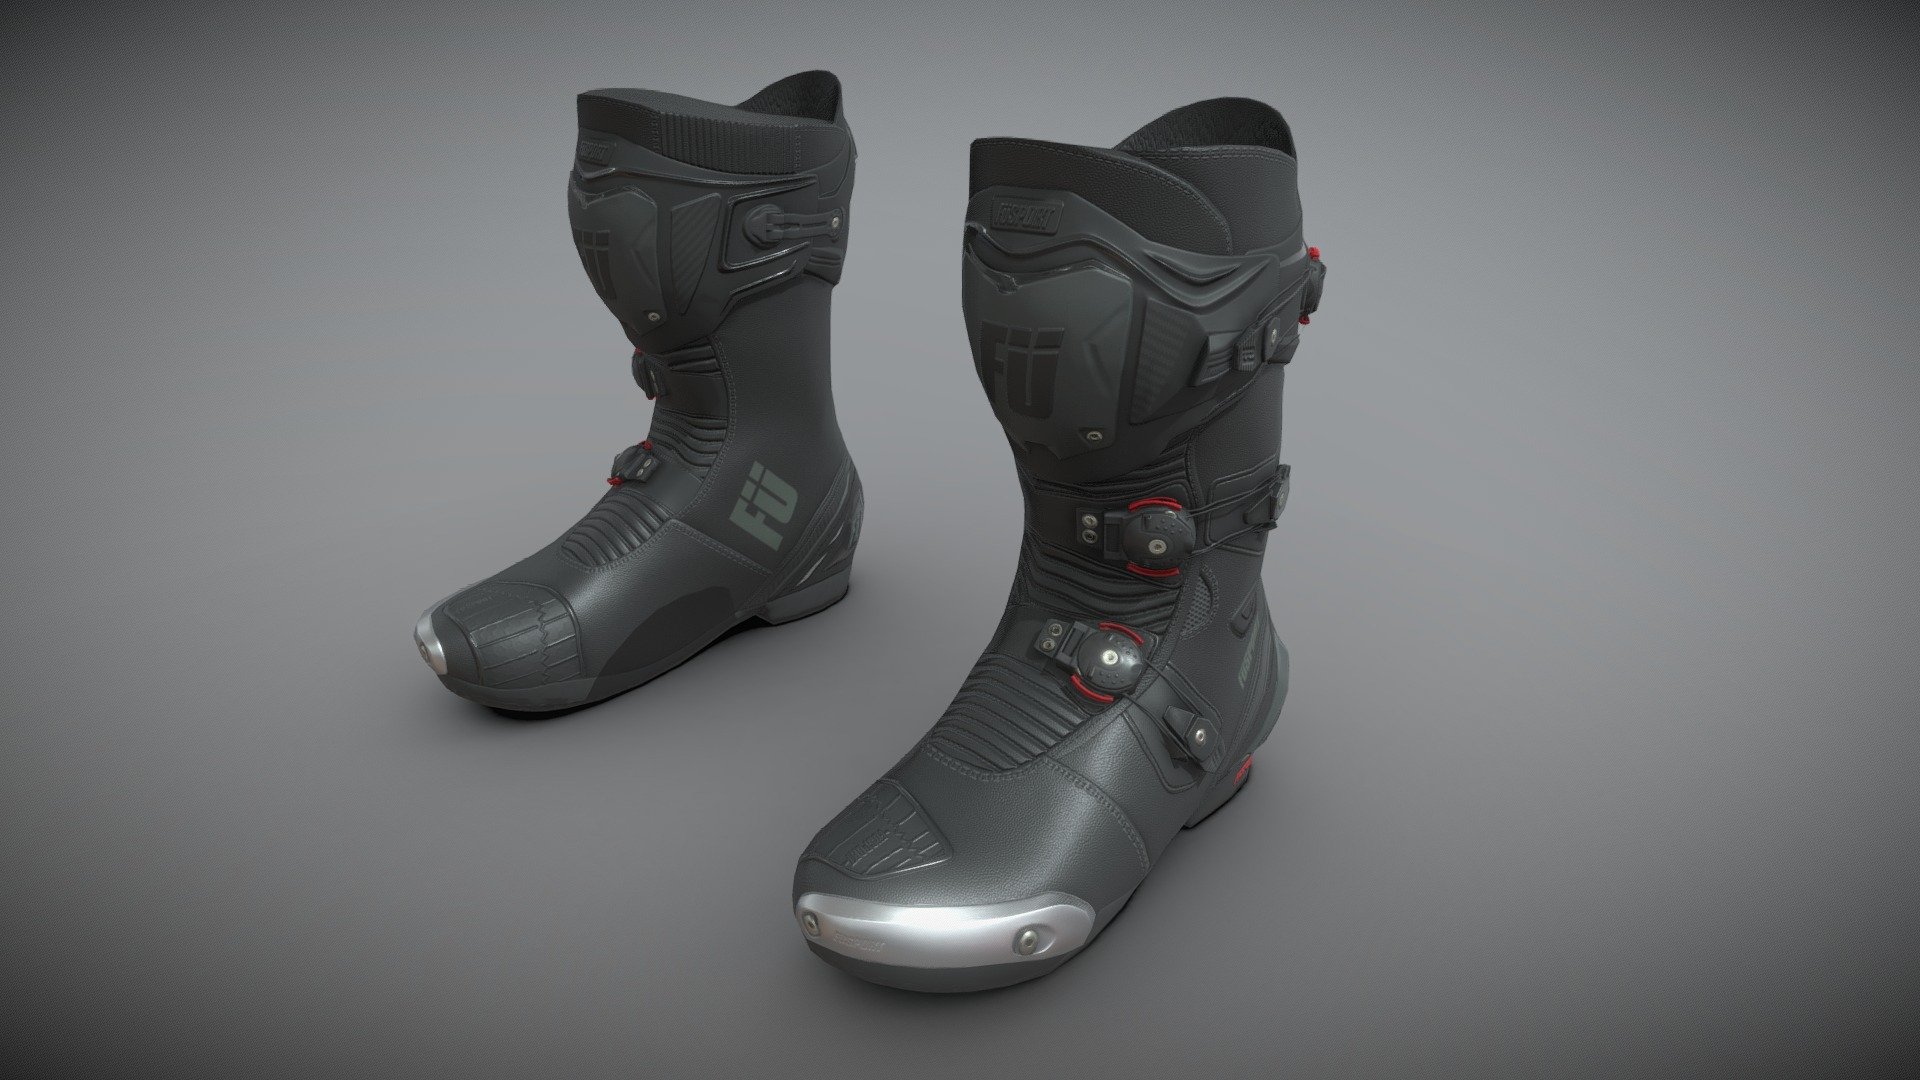 Boots Füsport XR1 Black  model. Modeled in Blender, textured in Substance painter. For the project MotoGP22 3d model